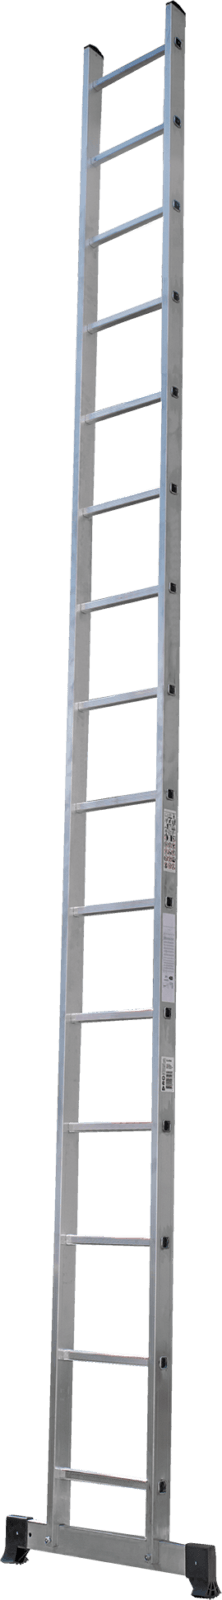 Лестница алюминиевая приставная NV1210 артикул 1210115